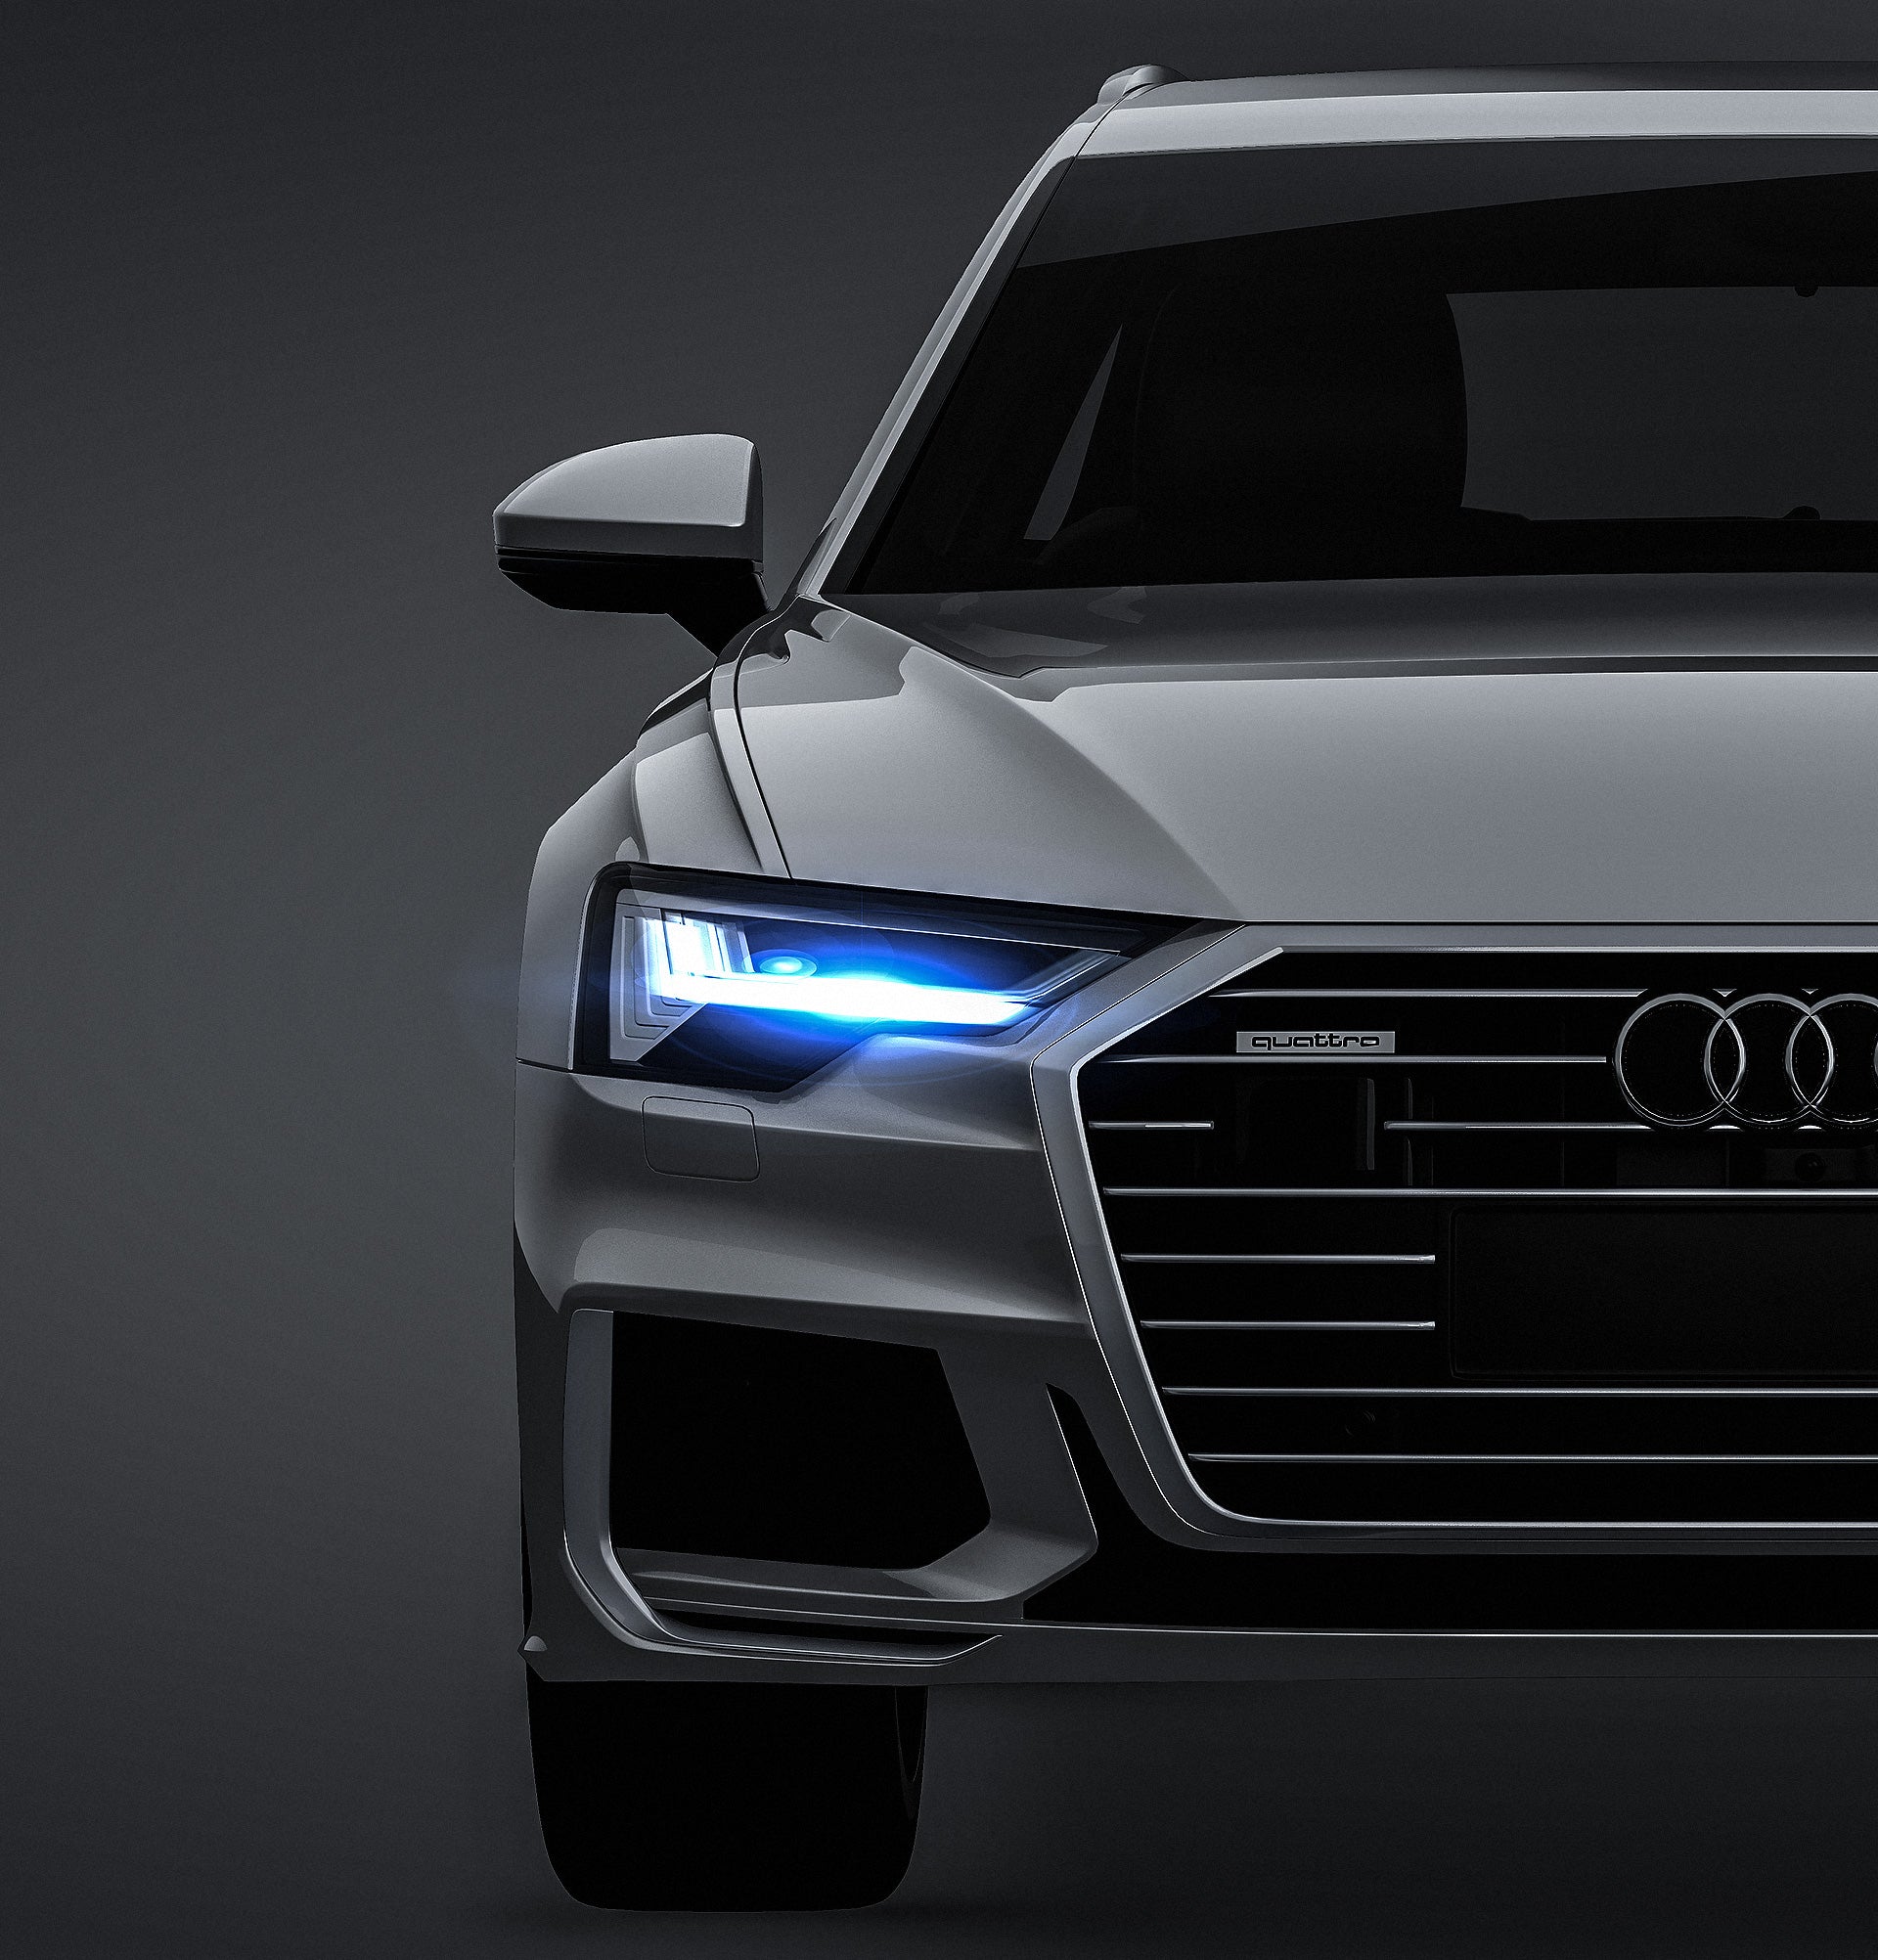 Download Audi A6 Avant S-line 2019 all sides Car Mockup Template.psd - Wrap-Wizards.com - Premium Car ...